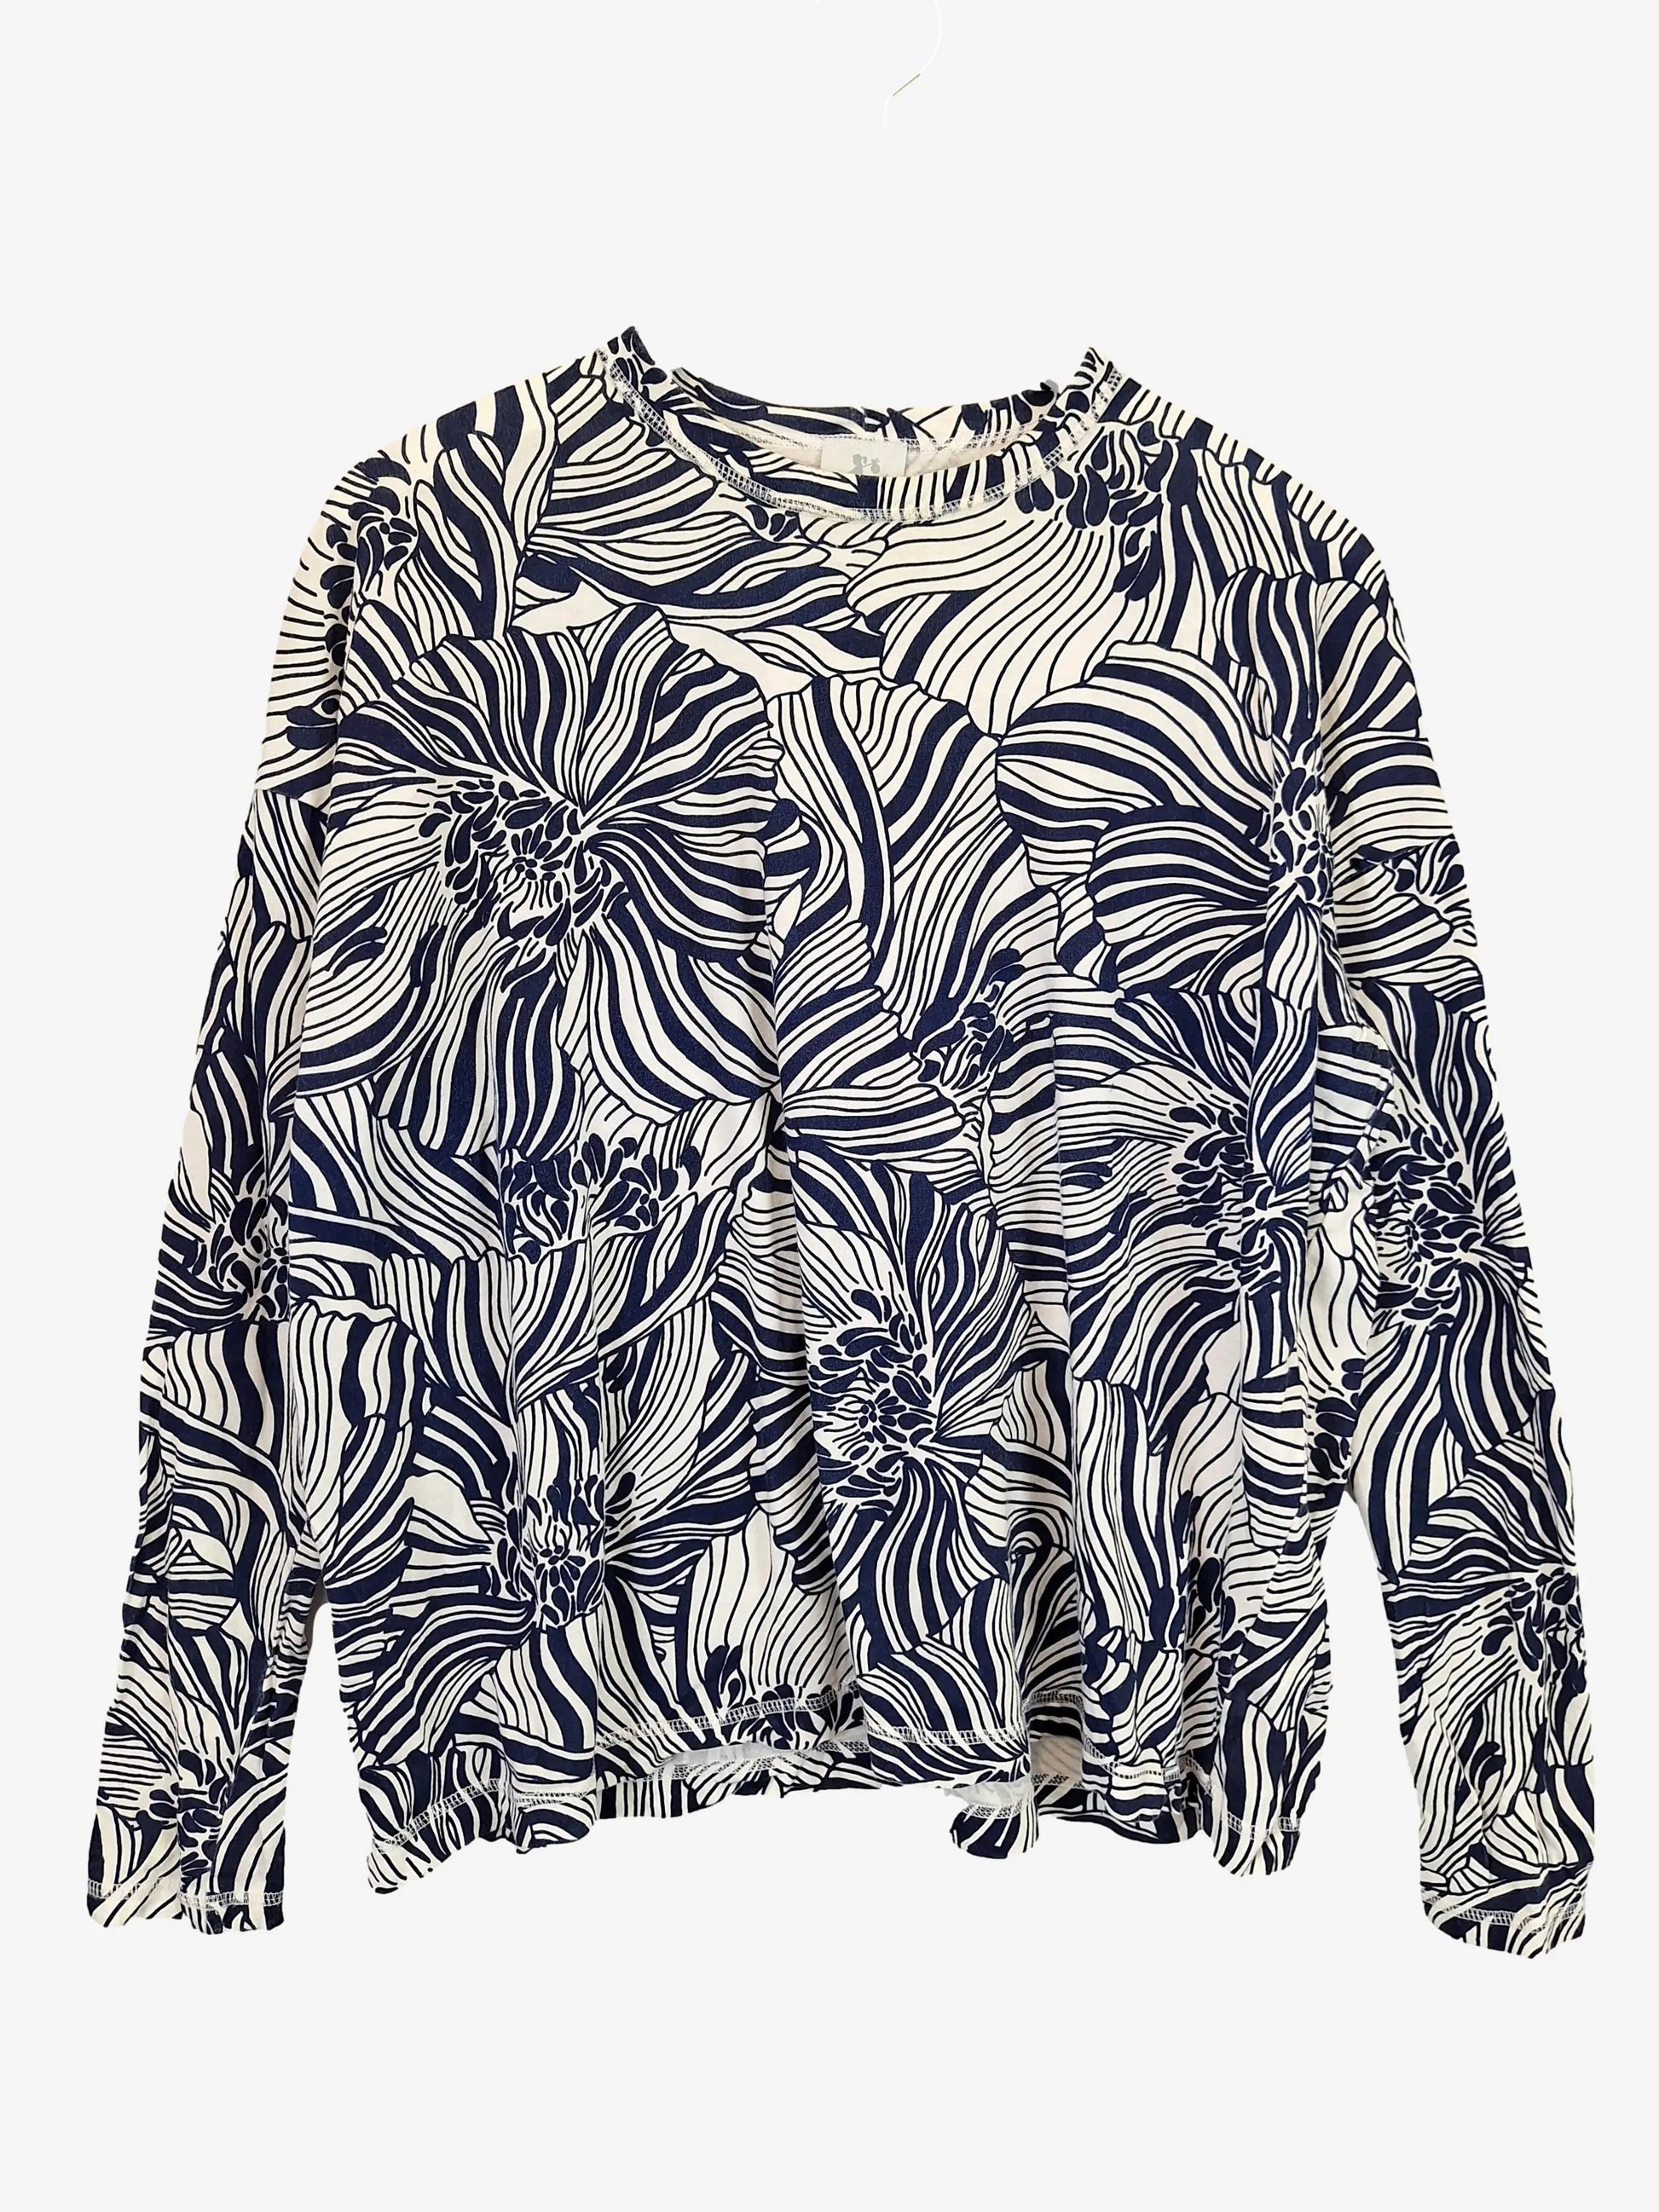 Karen Walker Floral Print Jersey Top Size 8 by SwapUp-Online Second Hand Store-Online Thrift Store